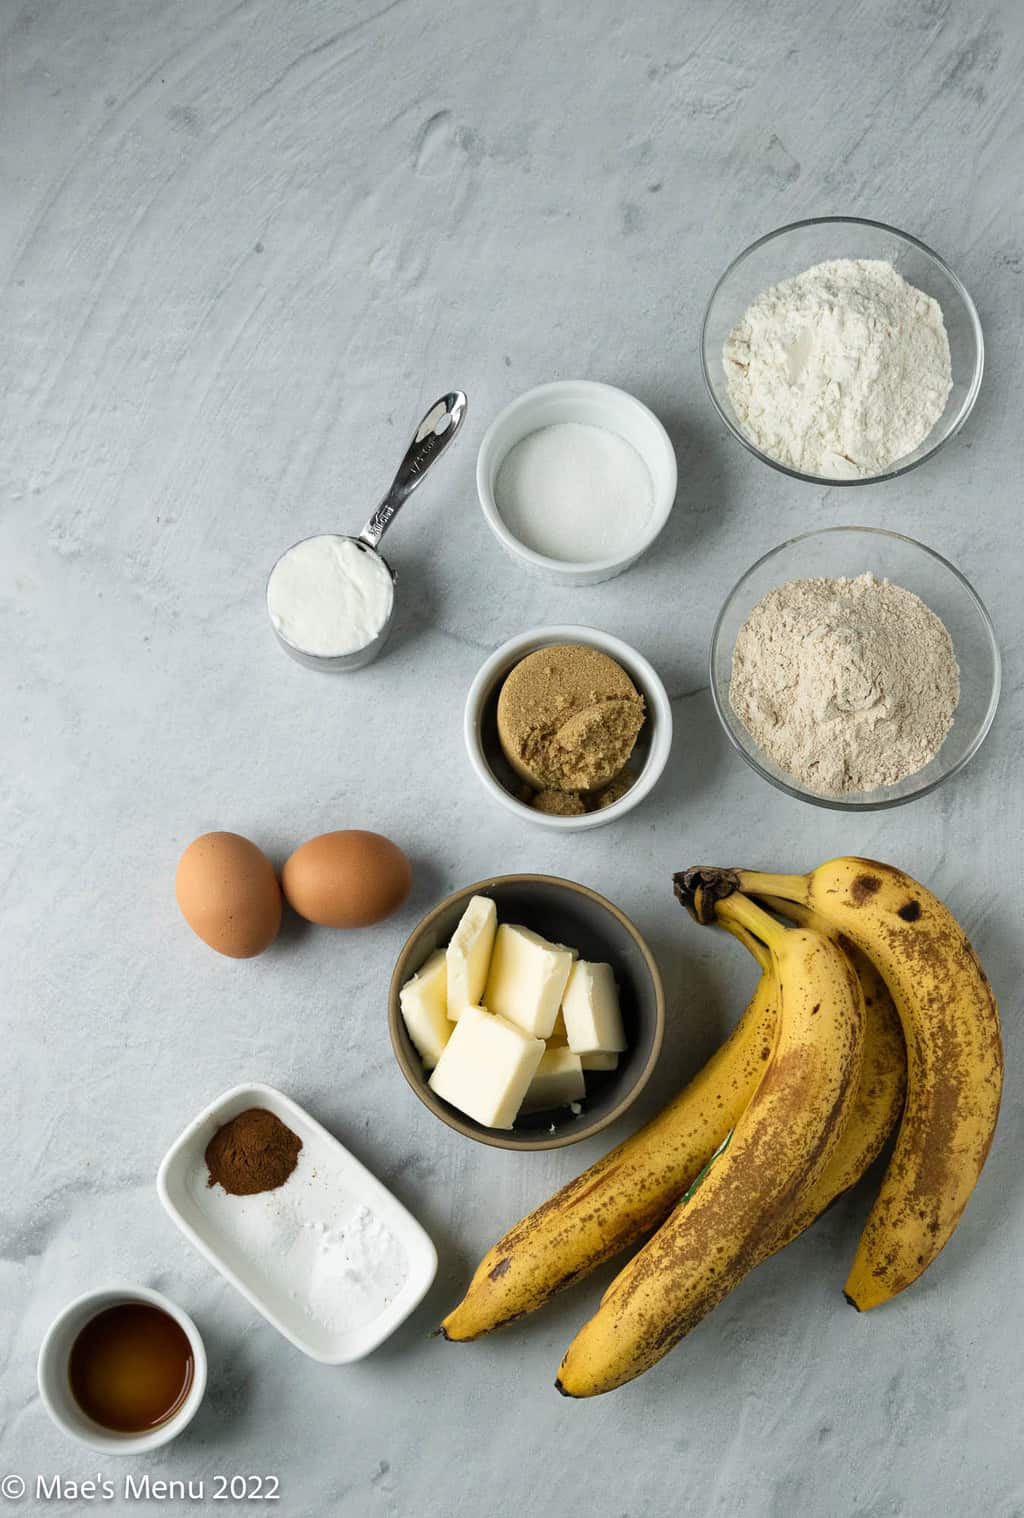 All of the ingredients for brown butter banana bread: flours, sugar, brown sugar, greek yogurt, eggs, butter, overripe bananas, vanilla, cinnamon, and seasonings.